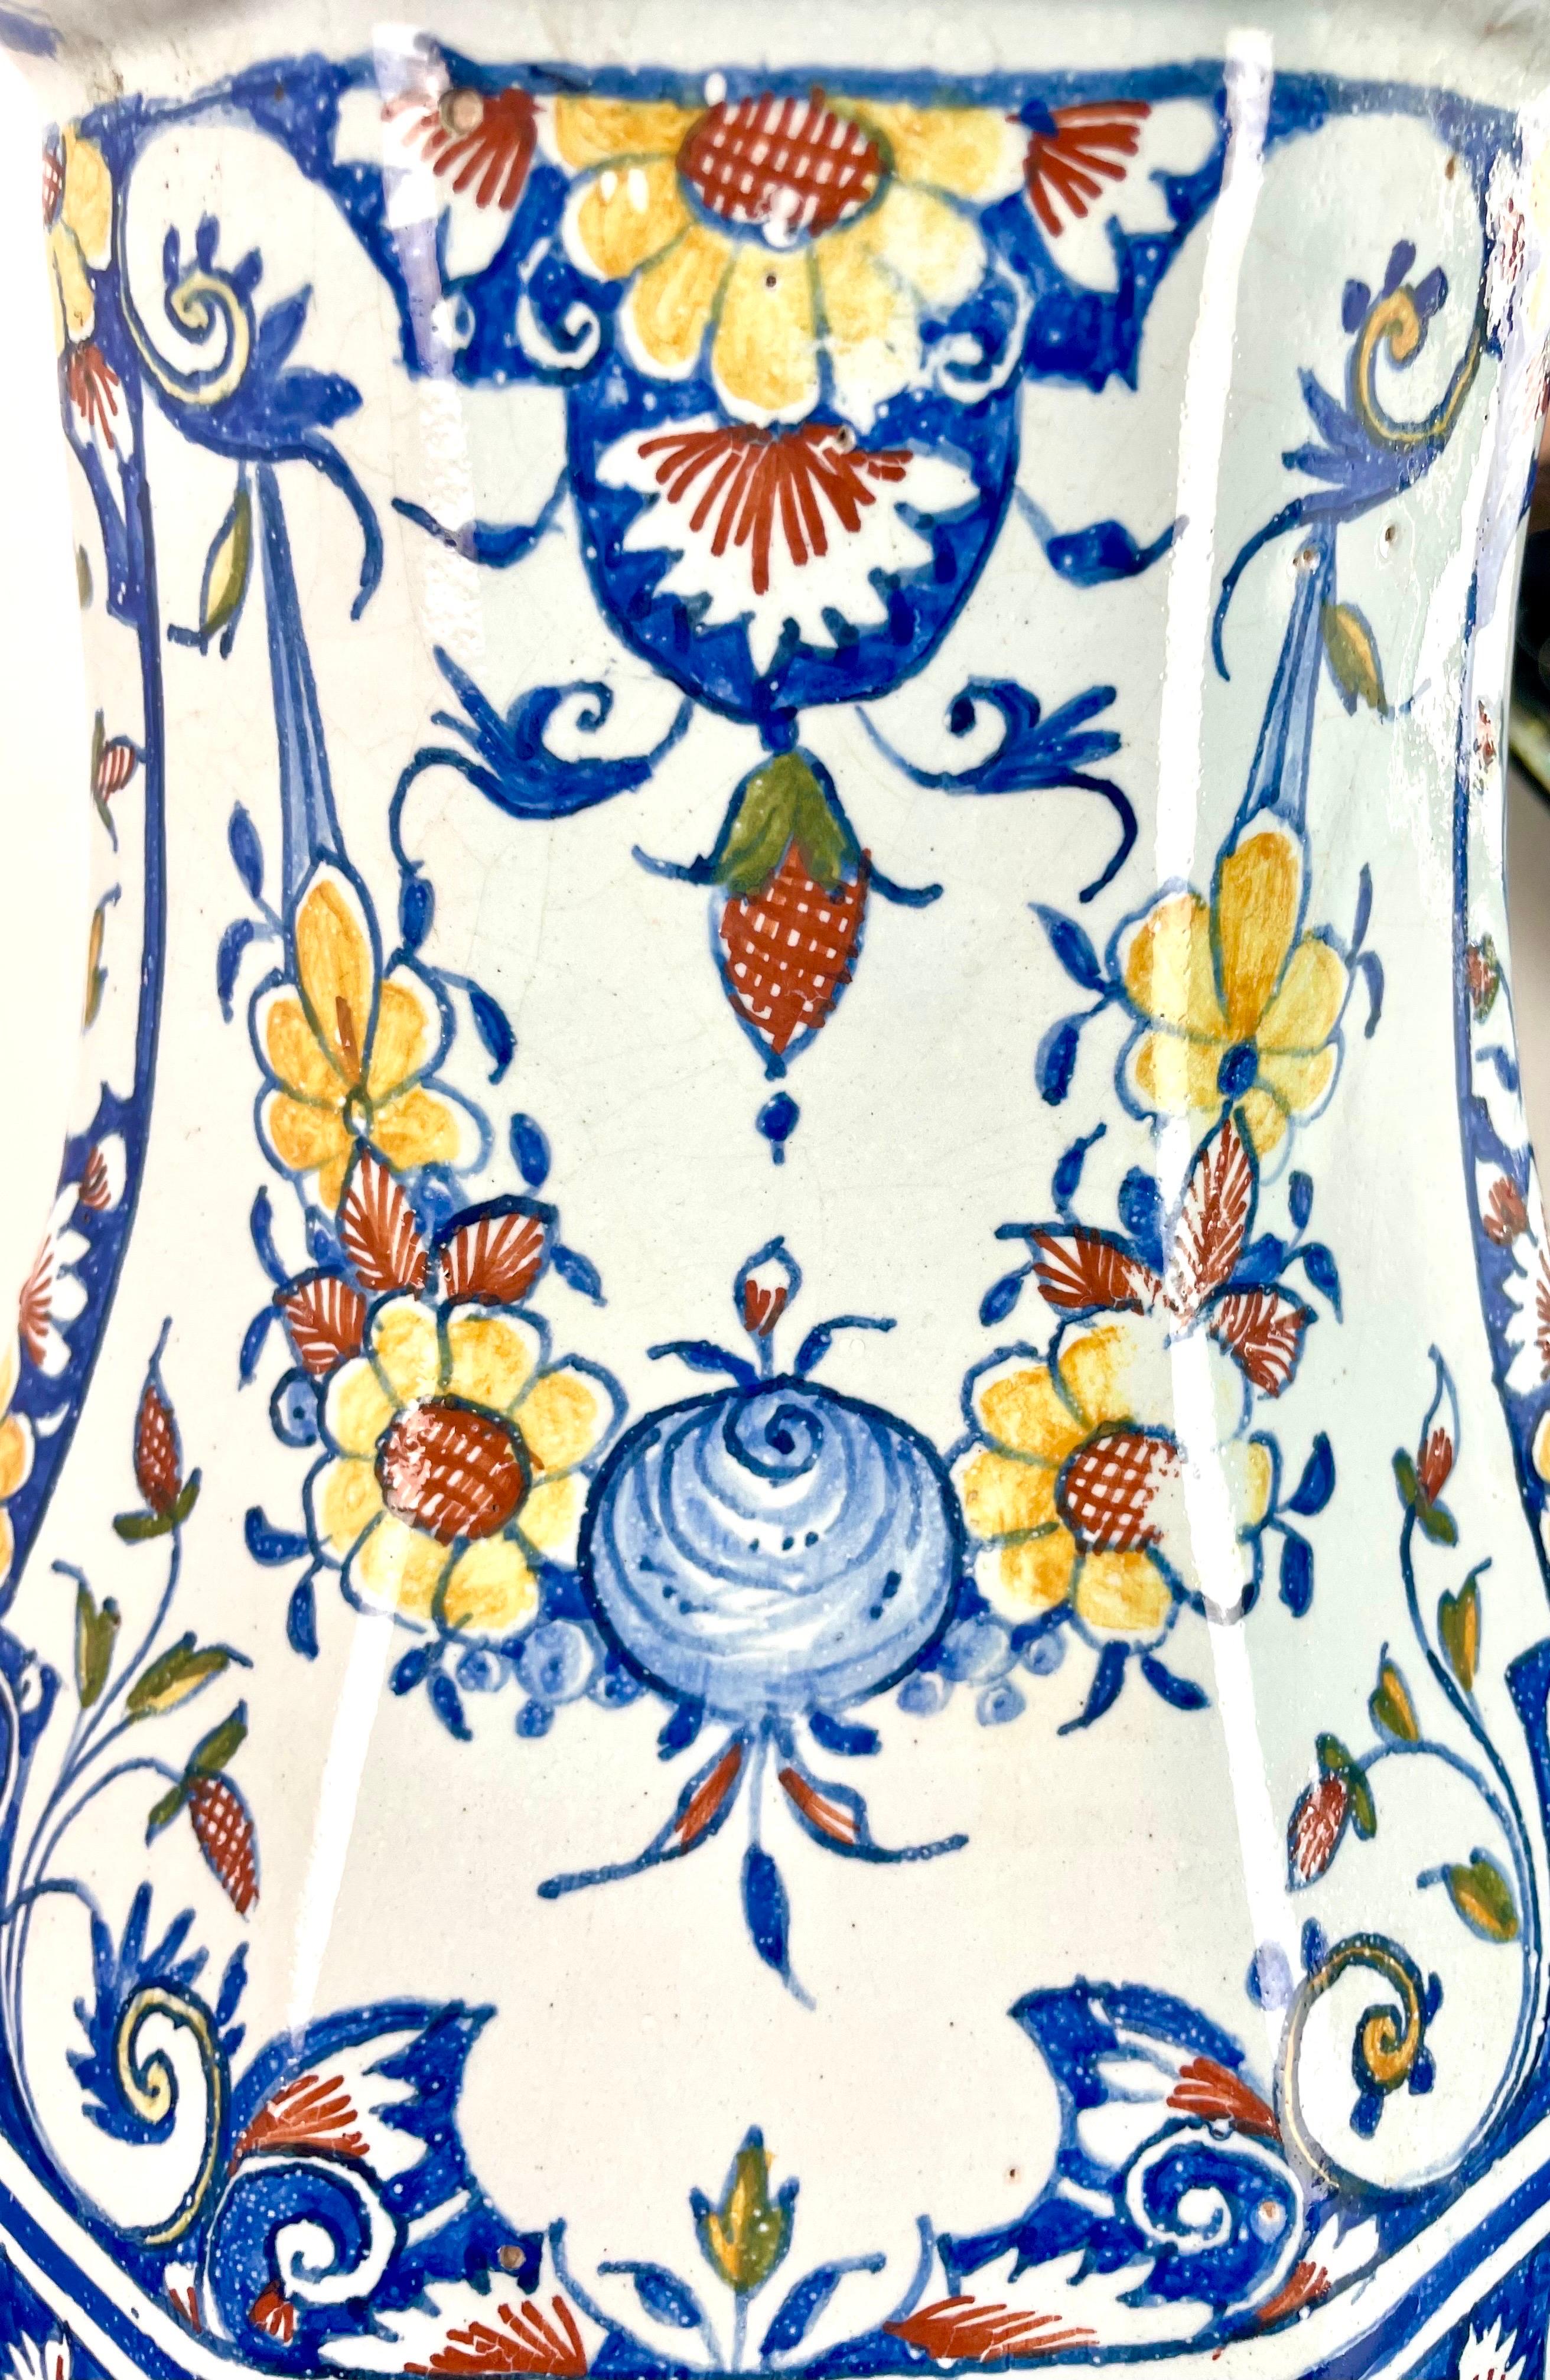 Vase - Rouen earthenware fountain, flower pot - blue white - 18th century France For Sale 3